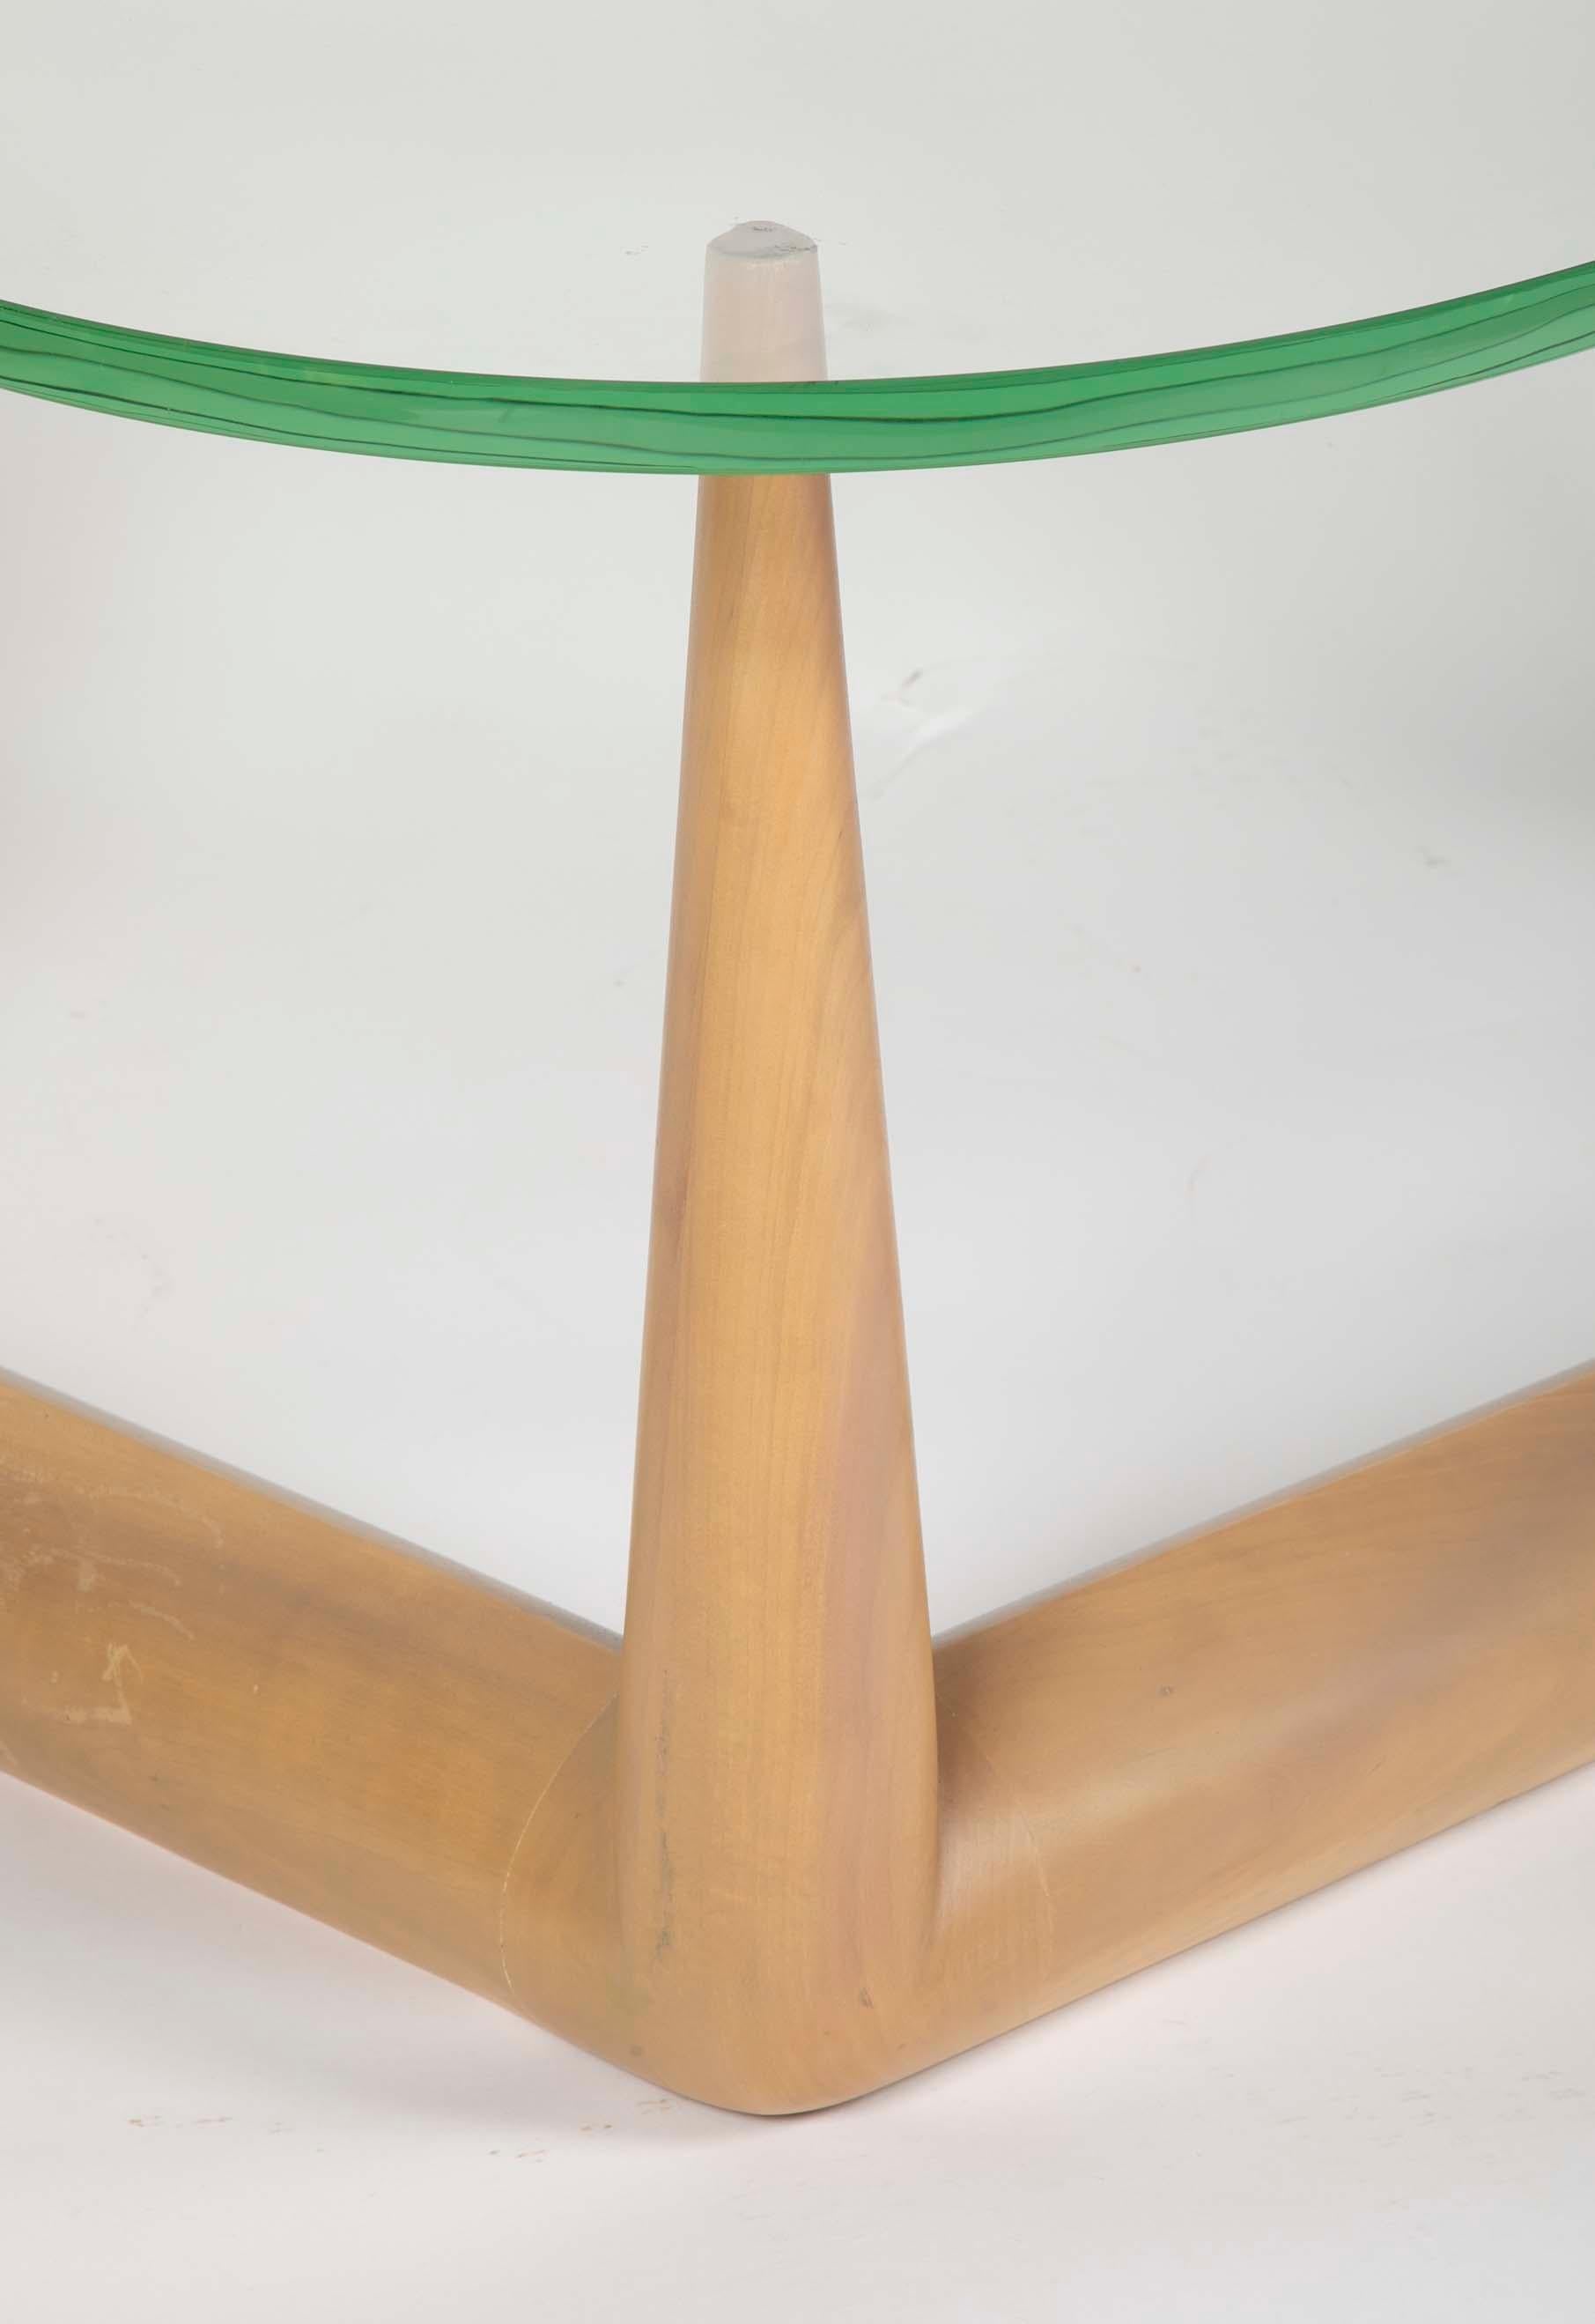 Wood Biomorphic Coffee Table by T.H. Robsjohn-Gibbings for Widdicomb